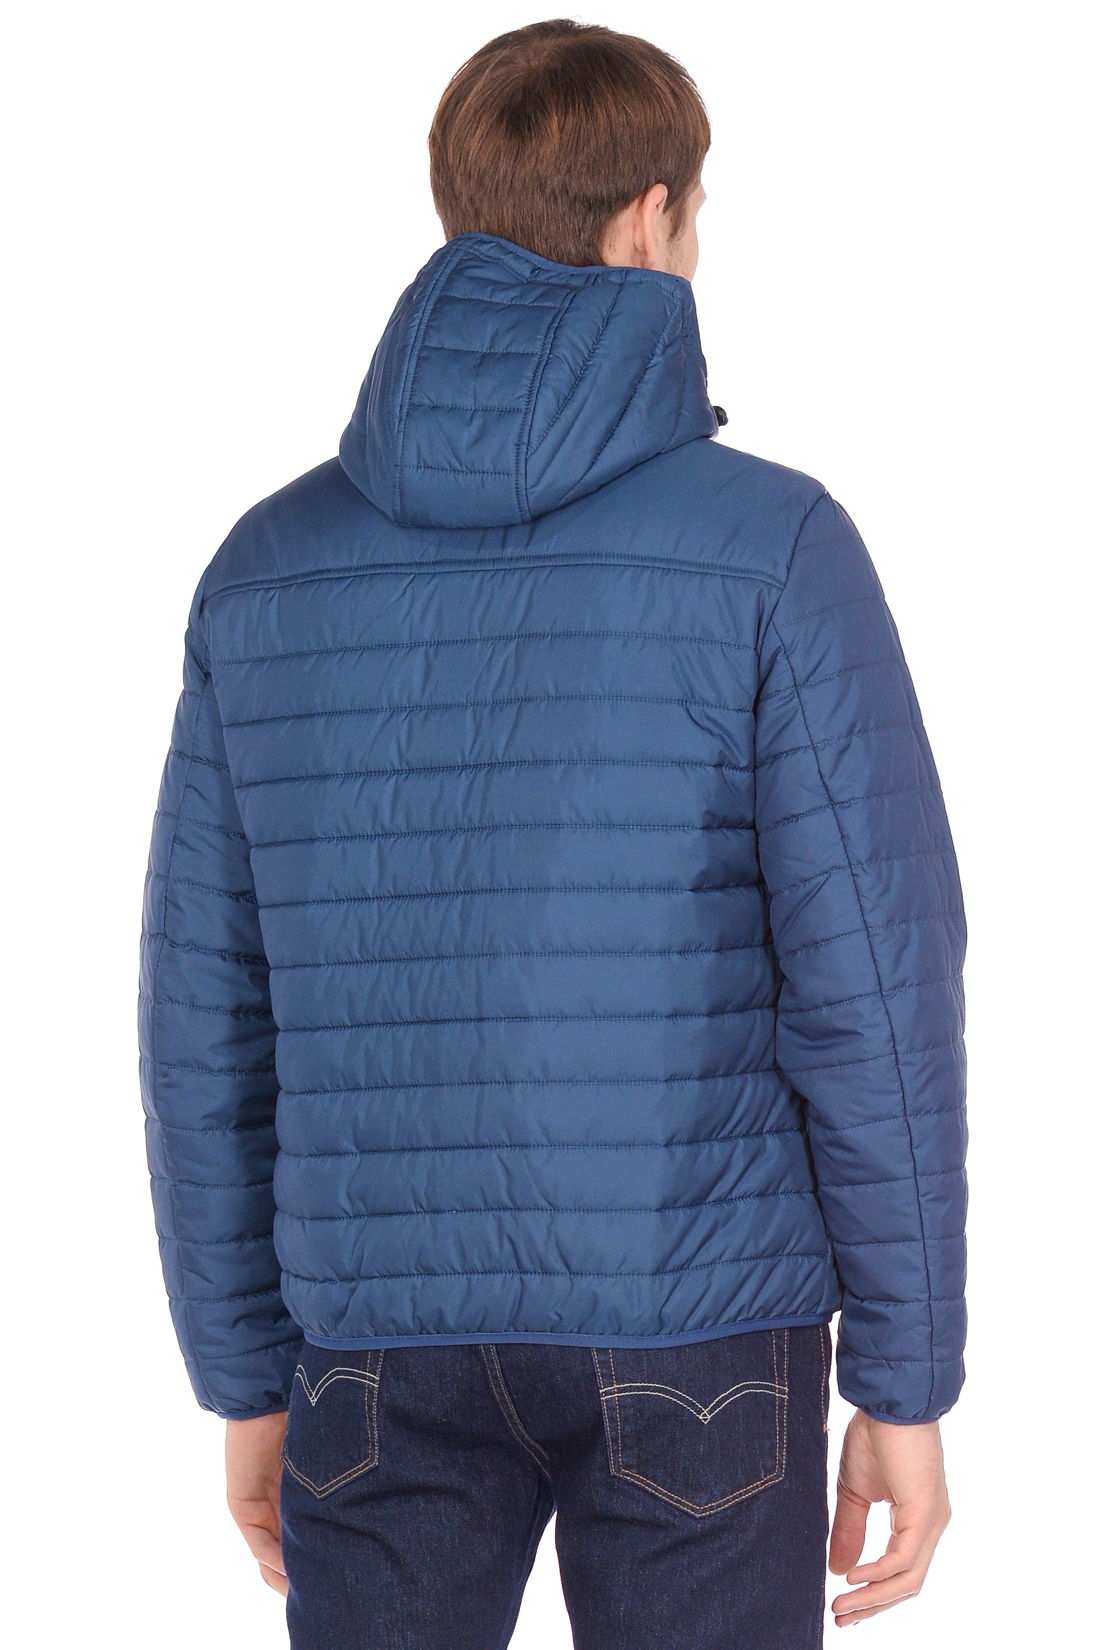 Куртка с двумя линиями карманов (арт. baon B539007), размер XXL, цвет синий Куртка с двумя линиями карманов (арт. baon B539007) - фото 5